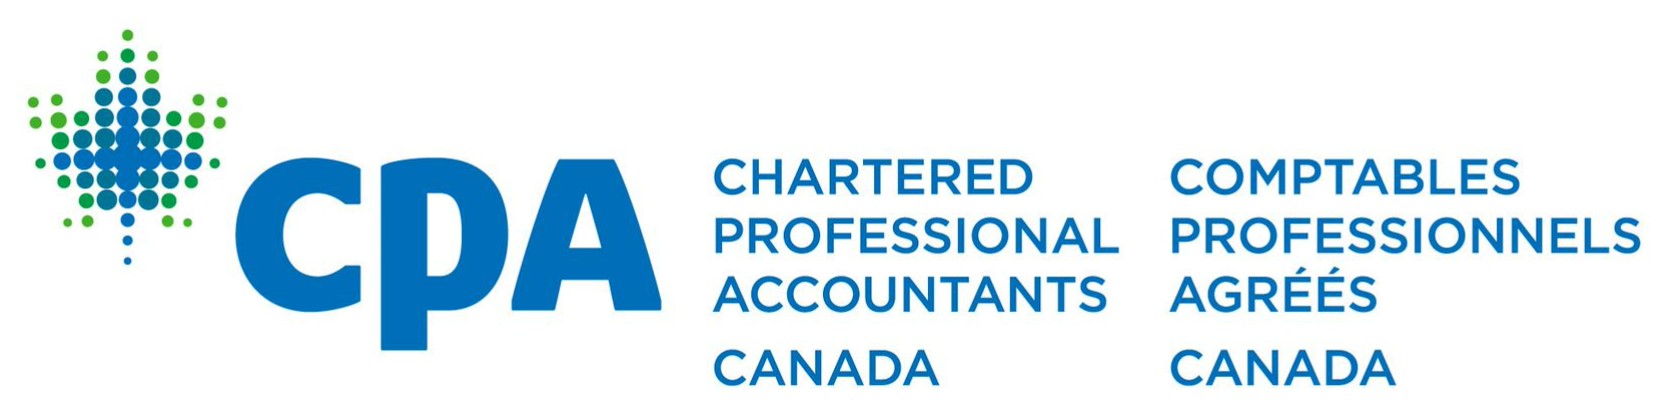 https://ppforum.ca/wp-content/uploads/2021/11/CPA-logo.jpg